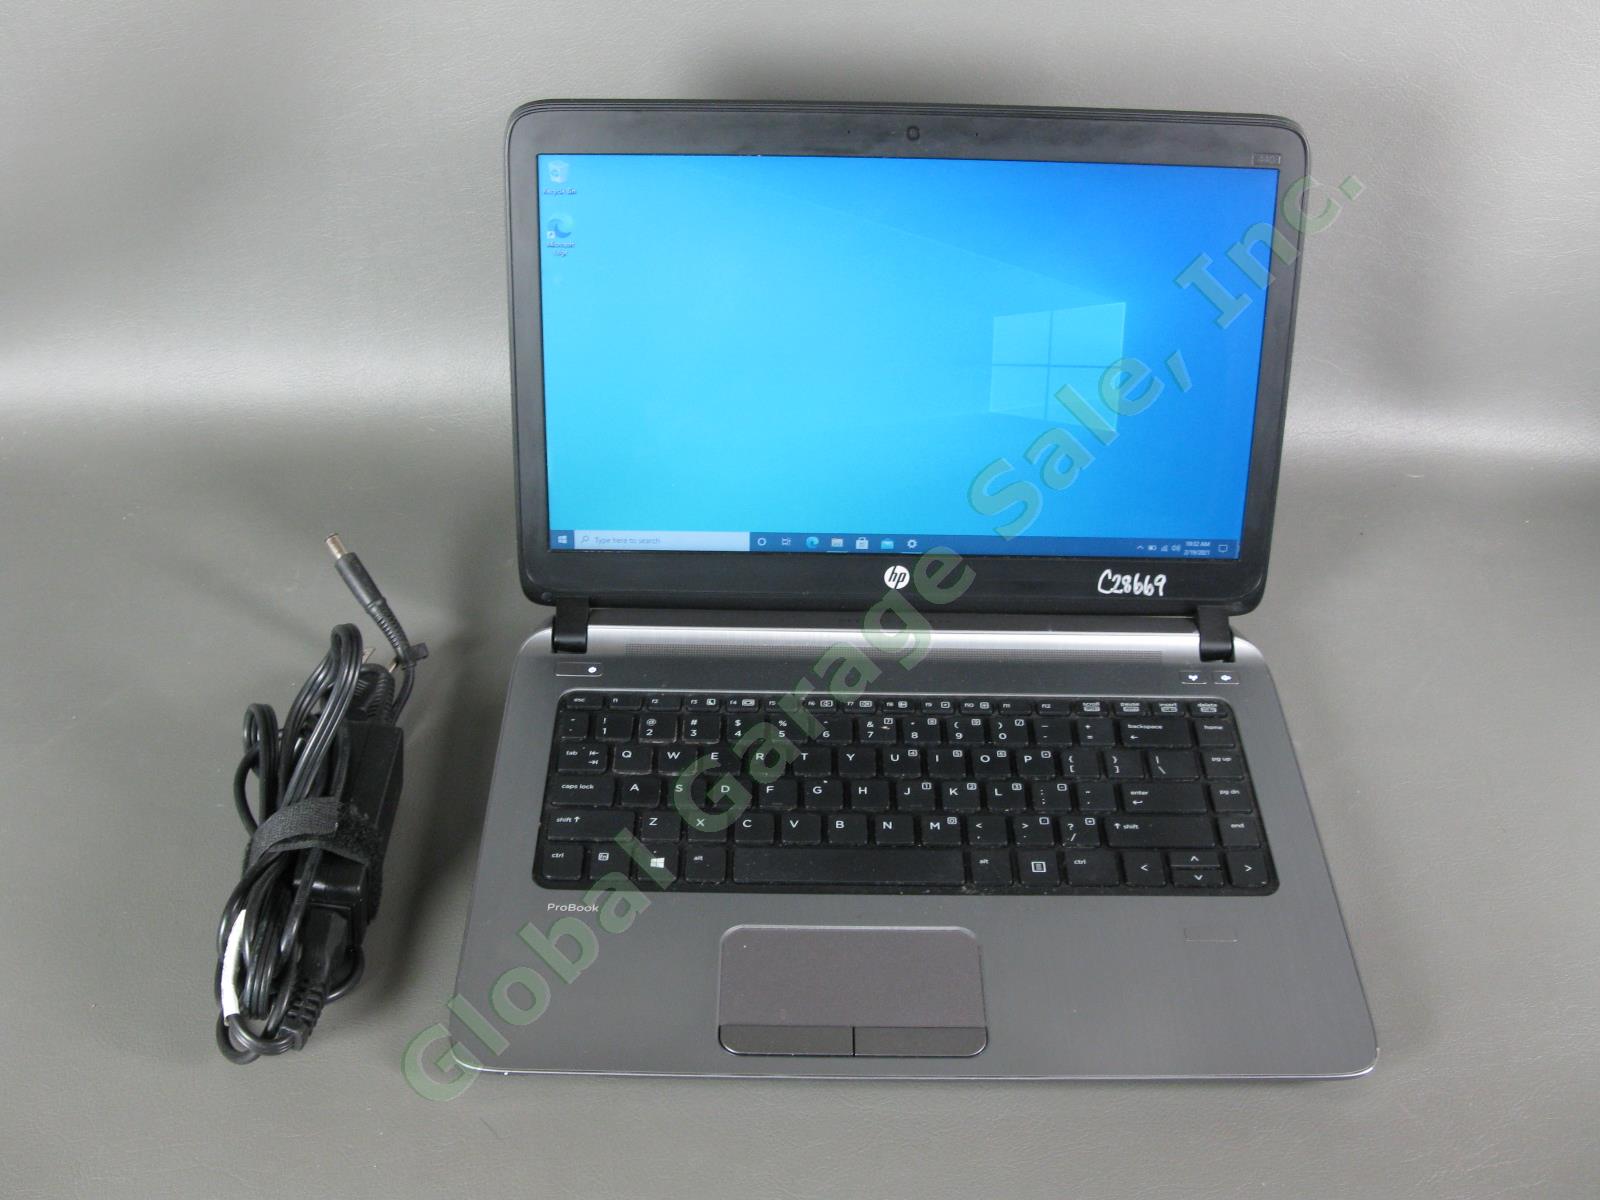 HP ProBook Laptop 440 G2 i5-5200U 2.20GHz 4GB RAM 460GB HD Windows 10 Great DEAL